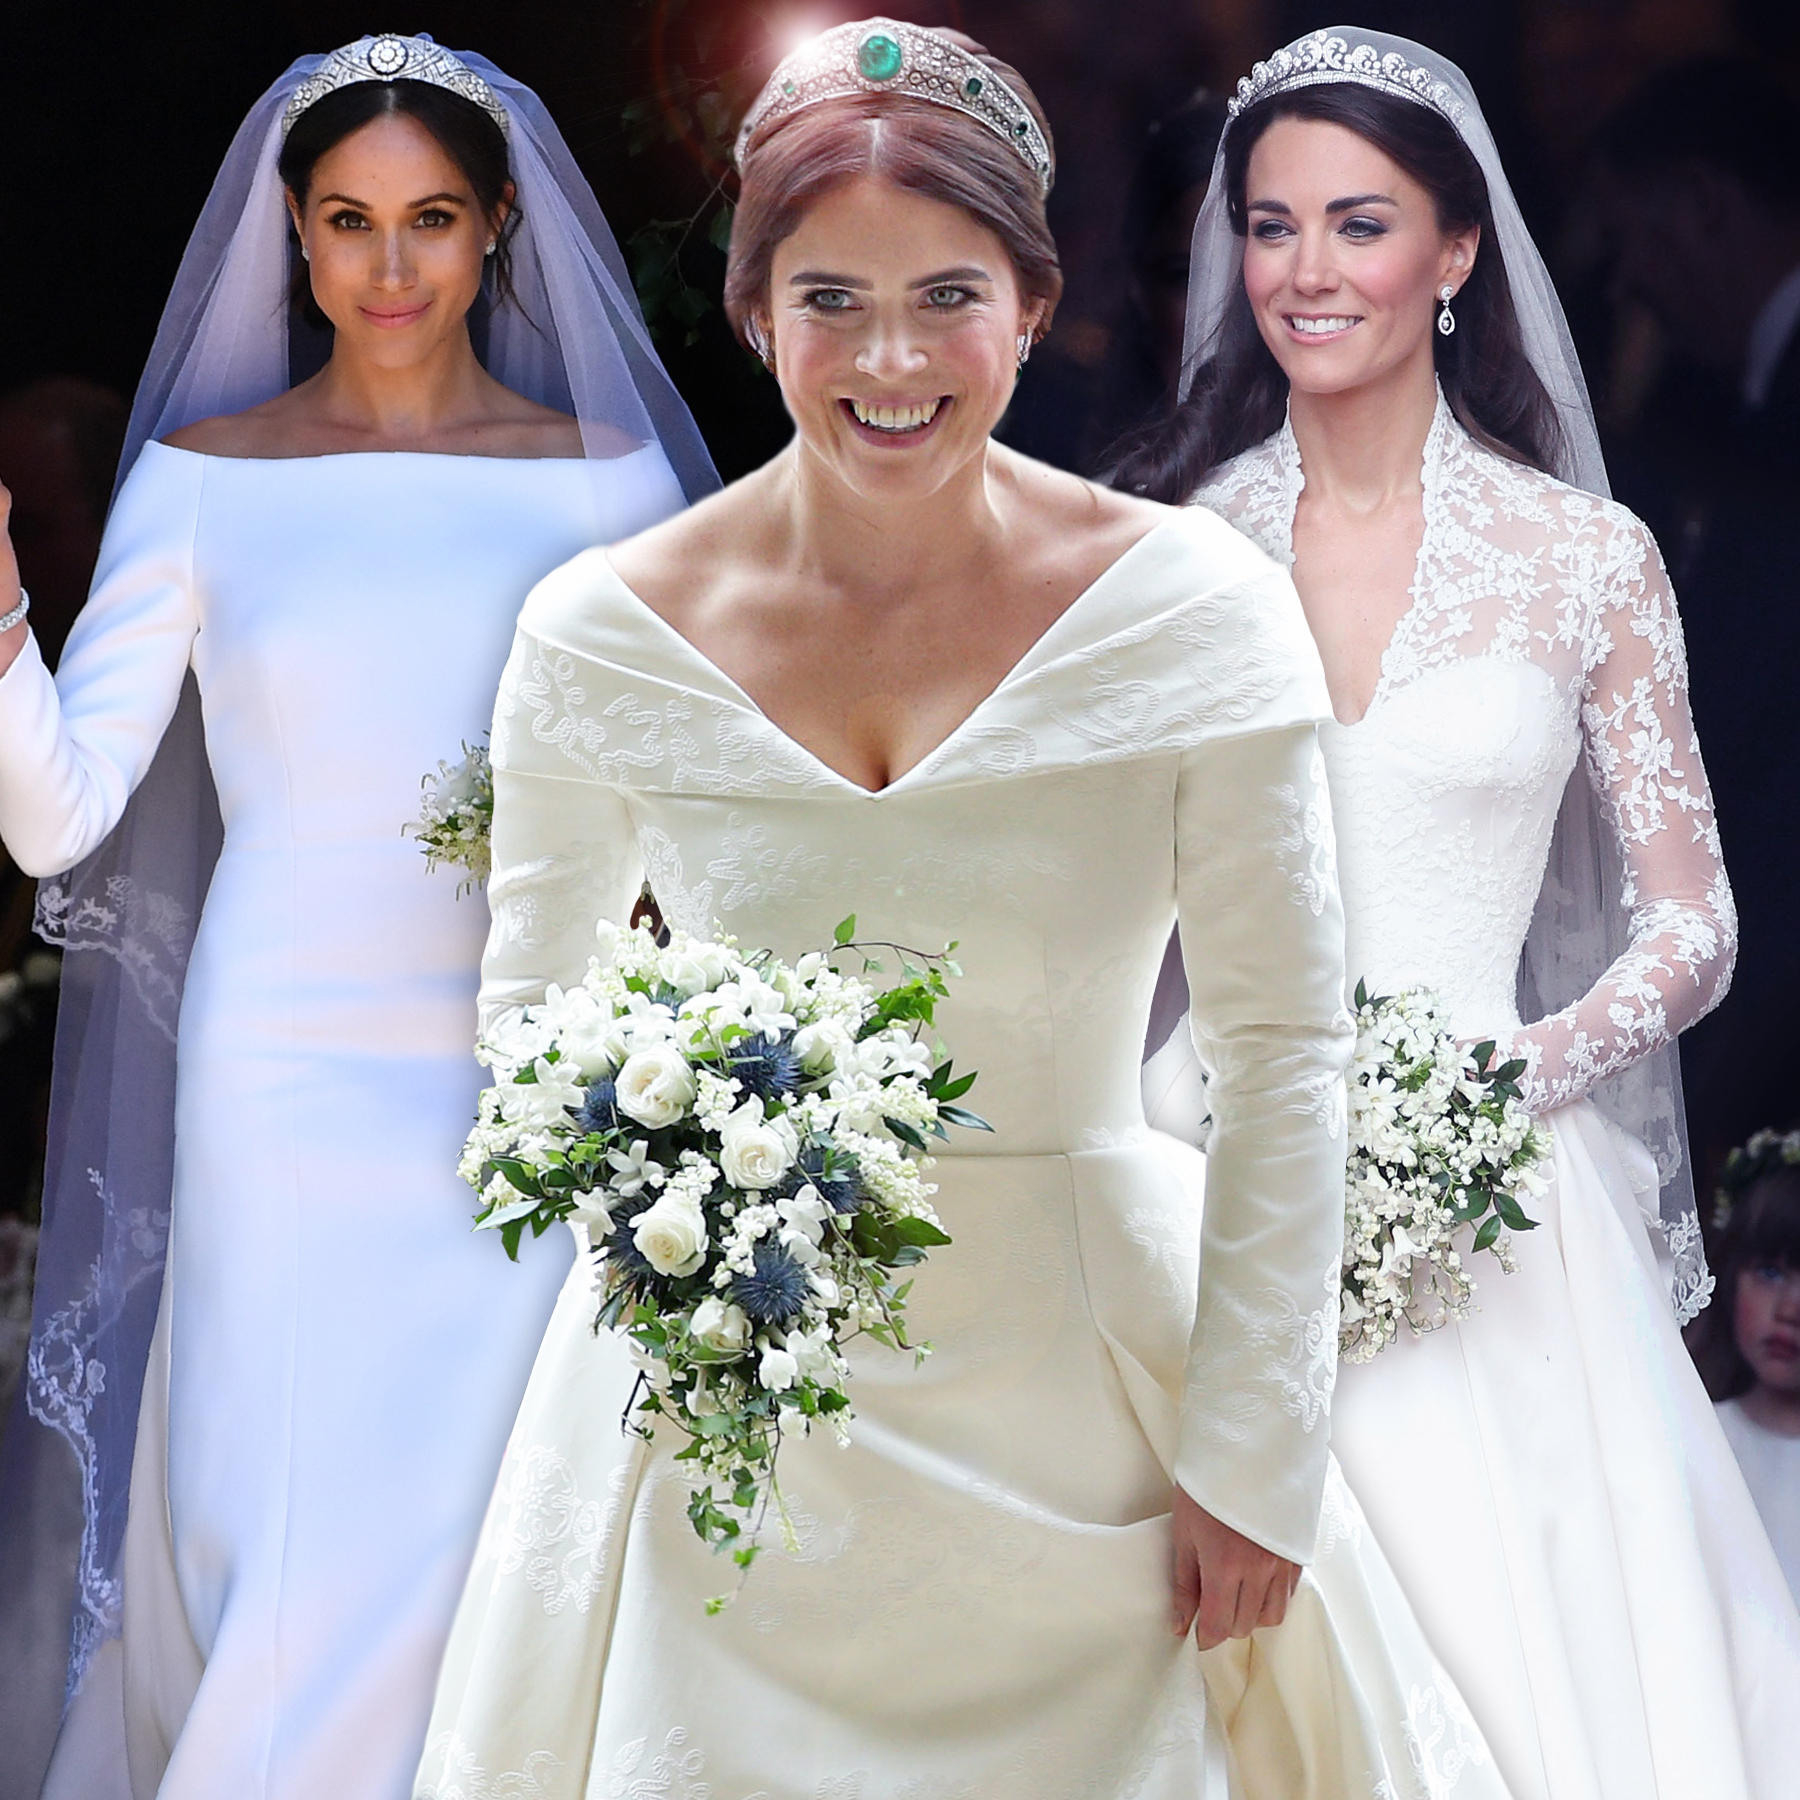 Royale Brautkleider: Kate, Meghan, Zara, Eugenie - Welcher